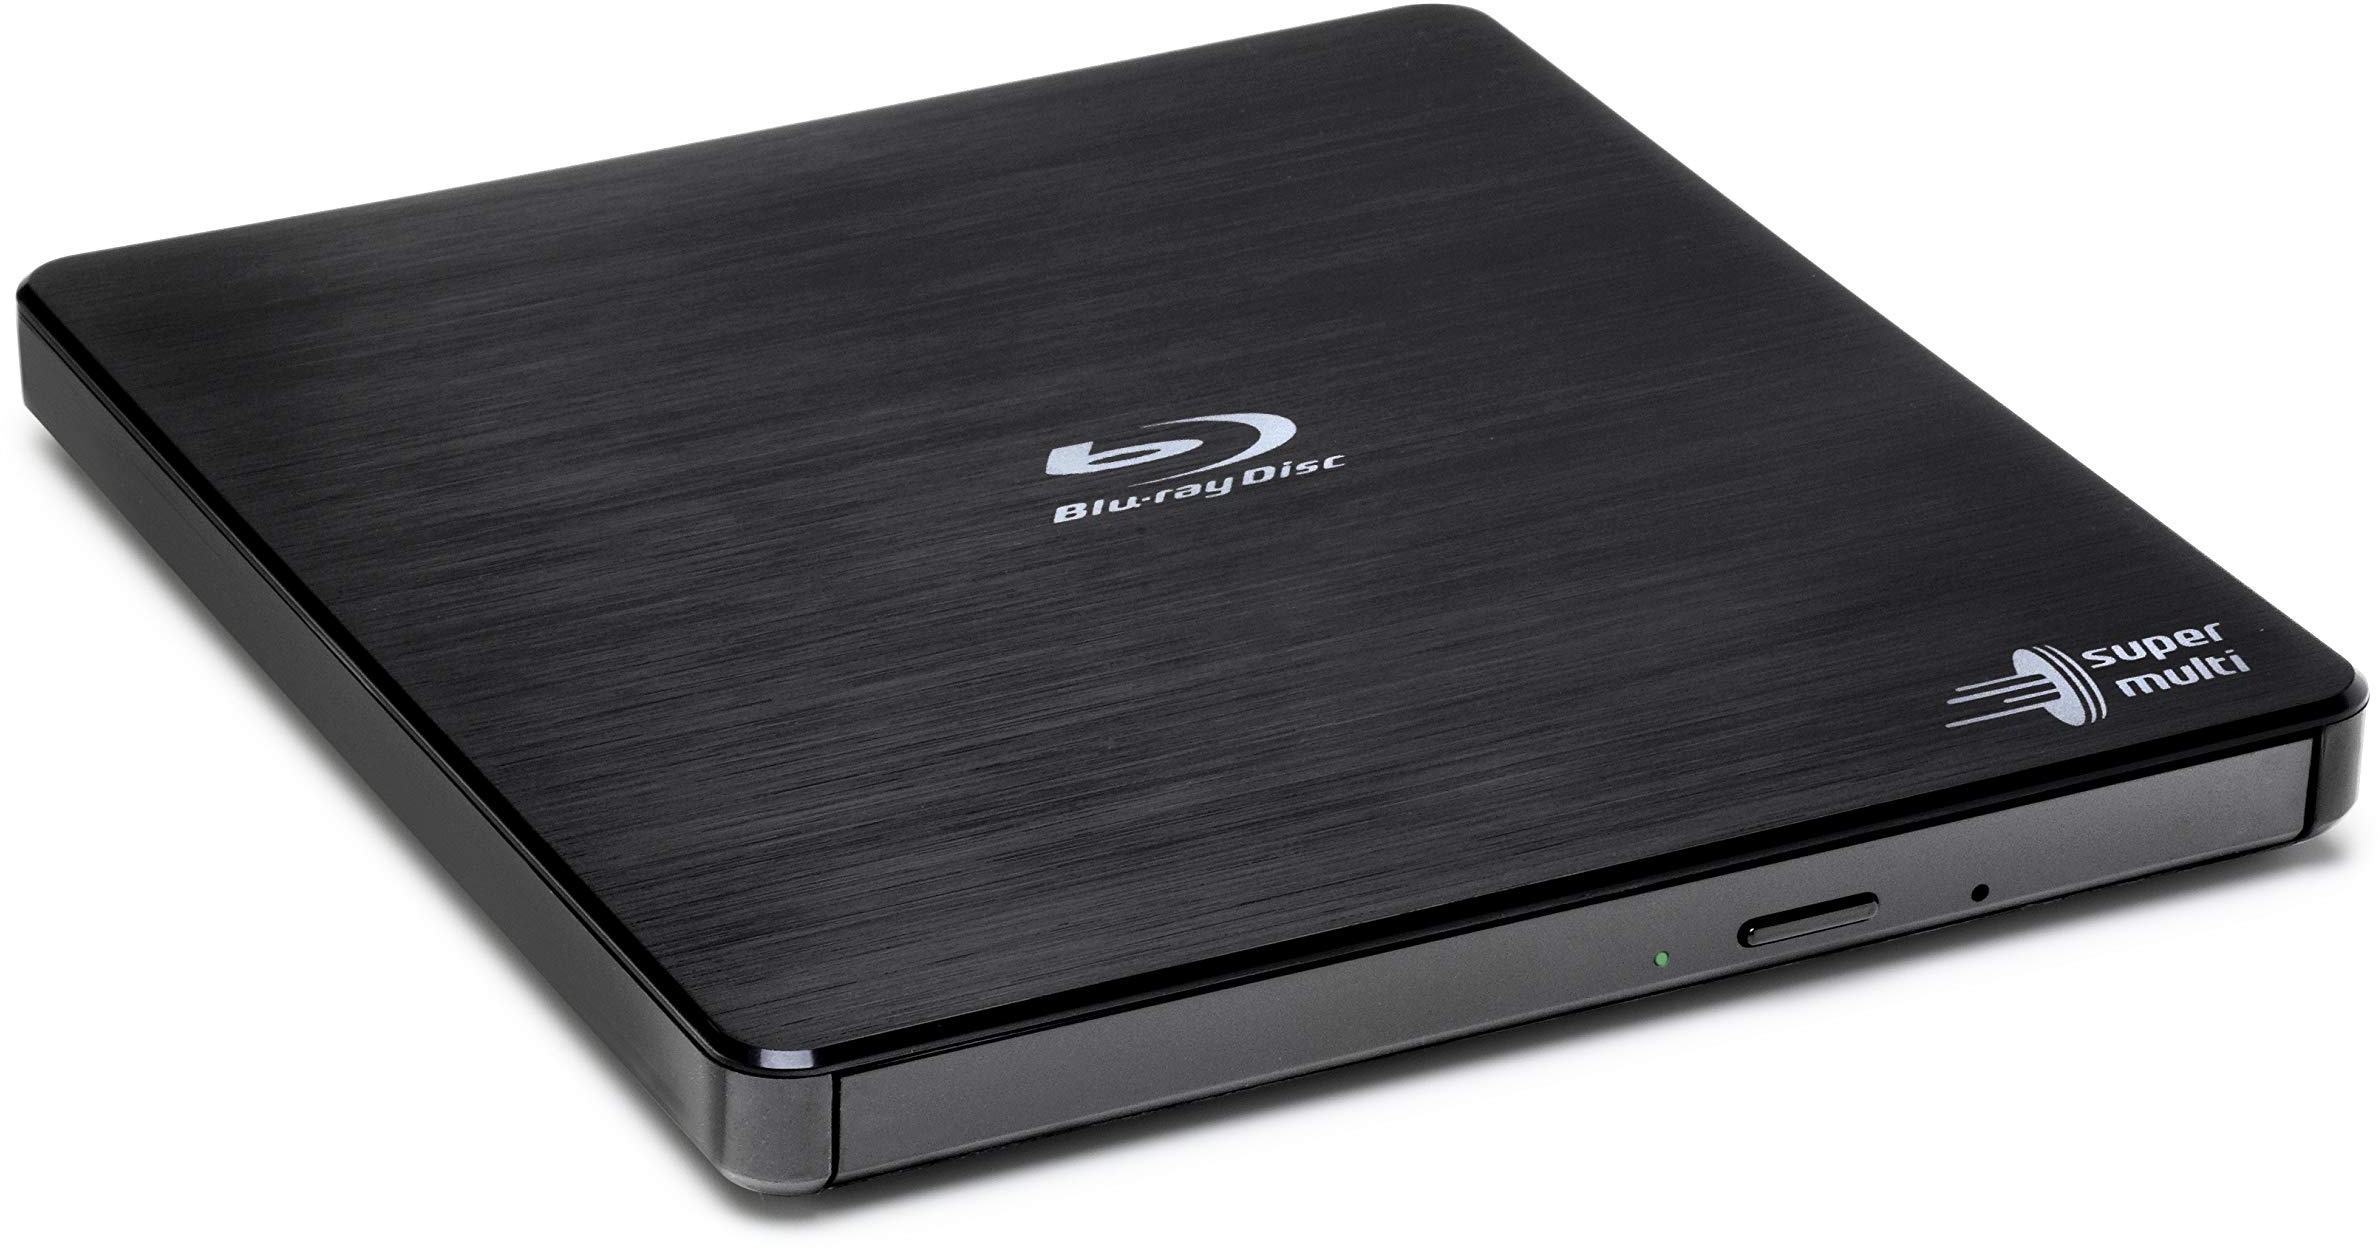 Hitachi-LG BP55 External Blu-Ray Drive, USB 2.0 Slim Portable Player/Rewriter for Laptop, Desktop PC, Windows 11 Compatible, with TV Connectivity, 3D Playback, 8x Read/Write Speed - Black